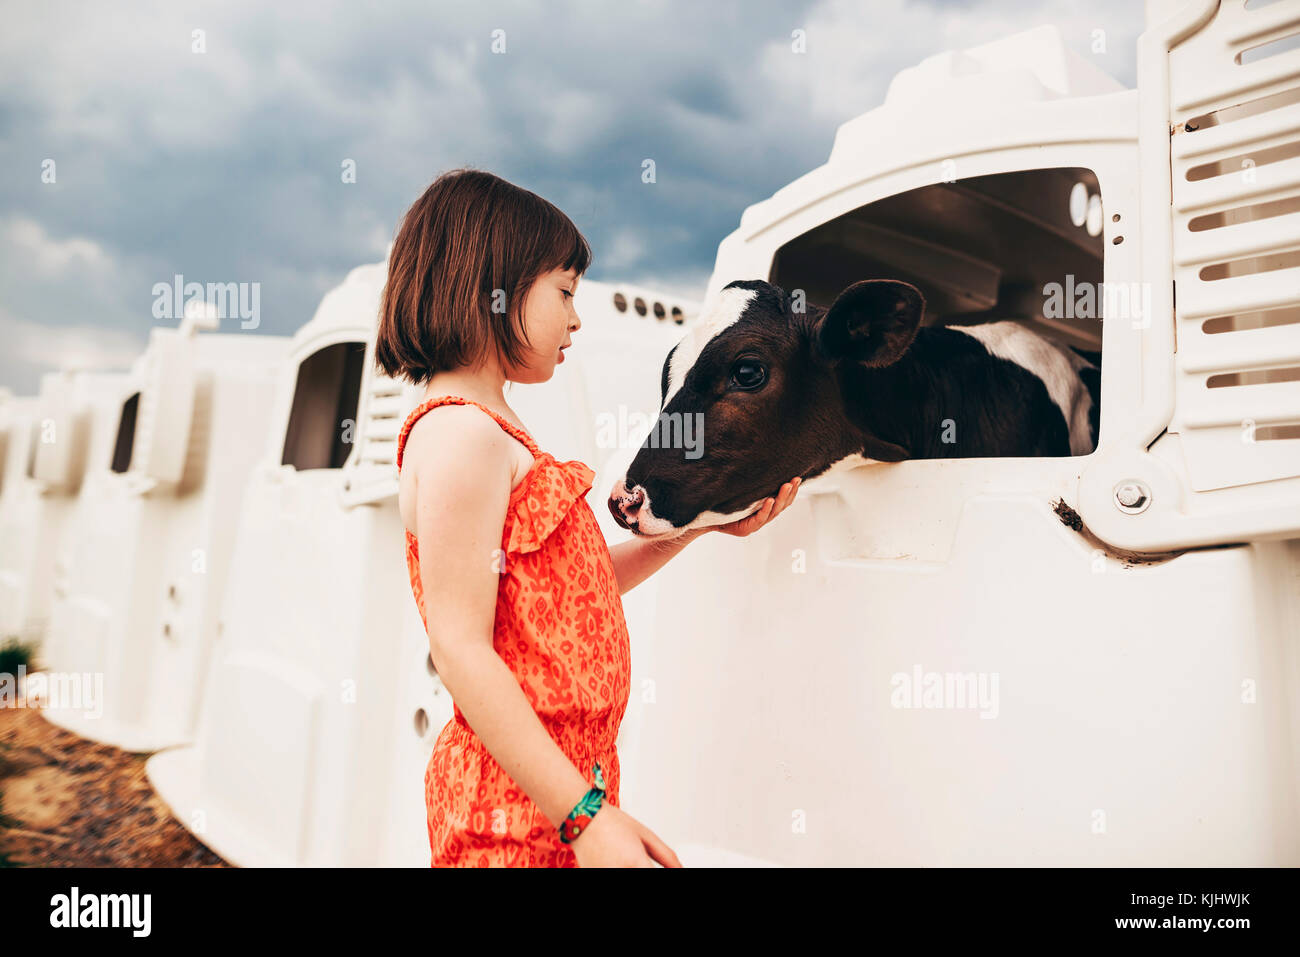 Girl stroking a baby cow in a calf hutch Stock Photo